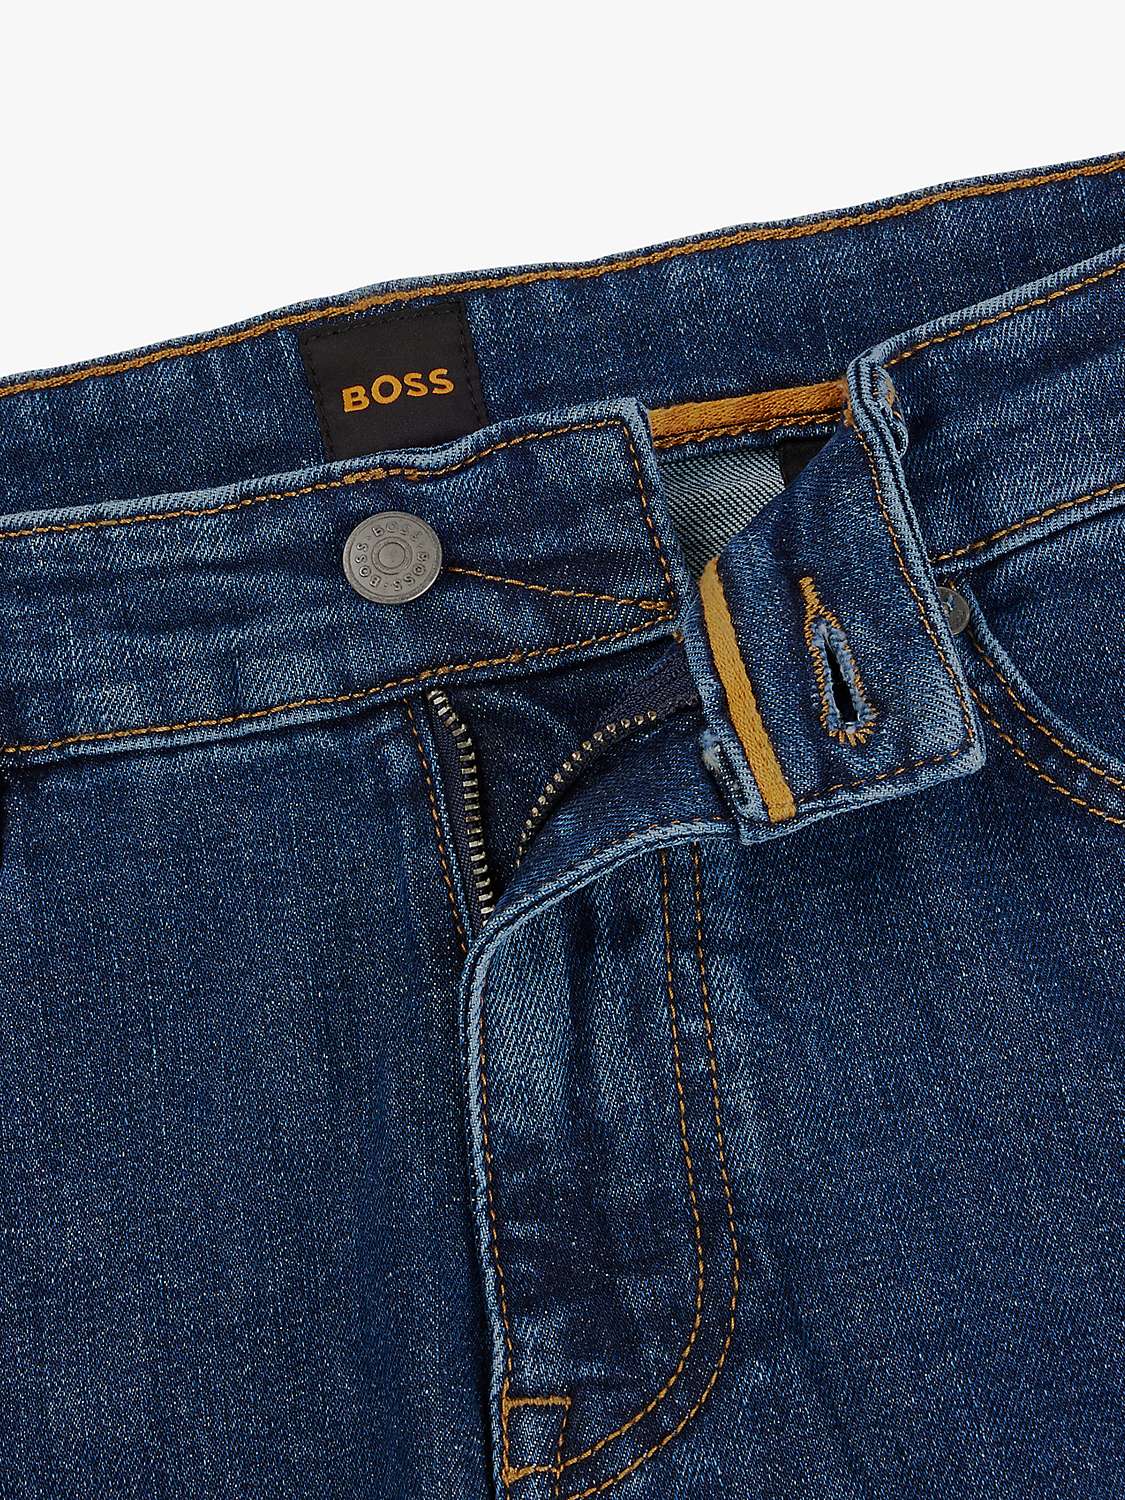 Buy BOSS Delaware 90ies Jeans, Navy Online at johnlewis.com